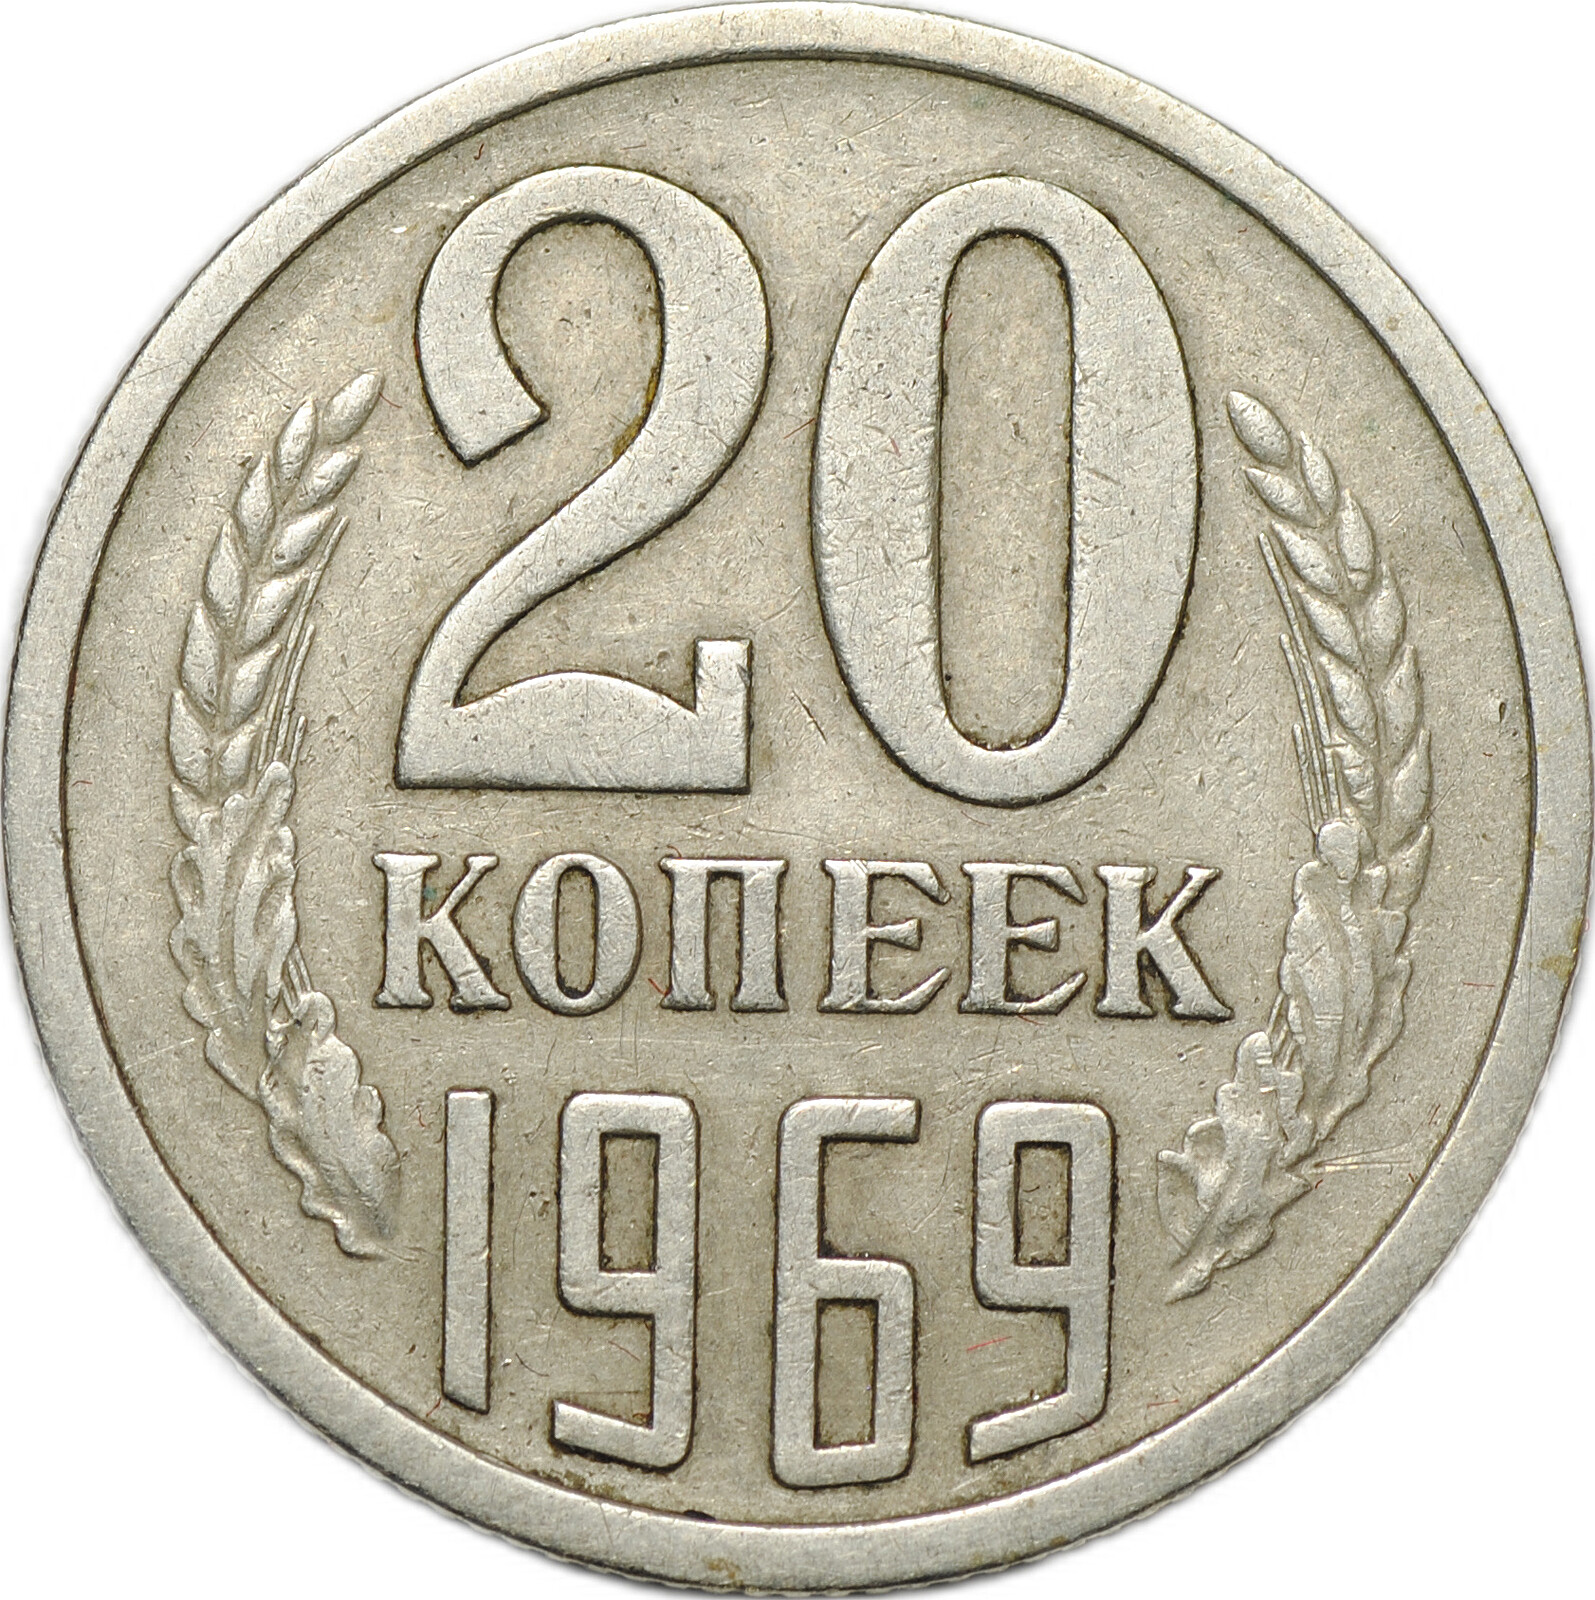 Монета ссср 20 копеек 1961